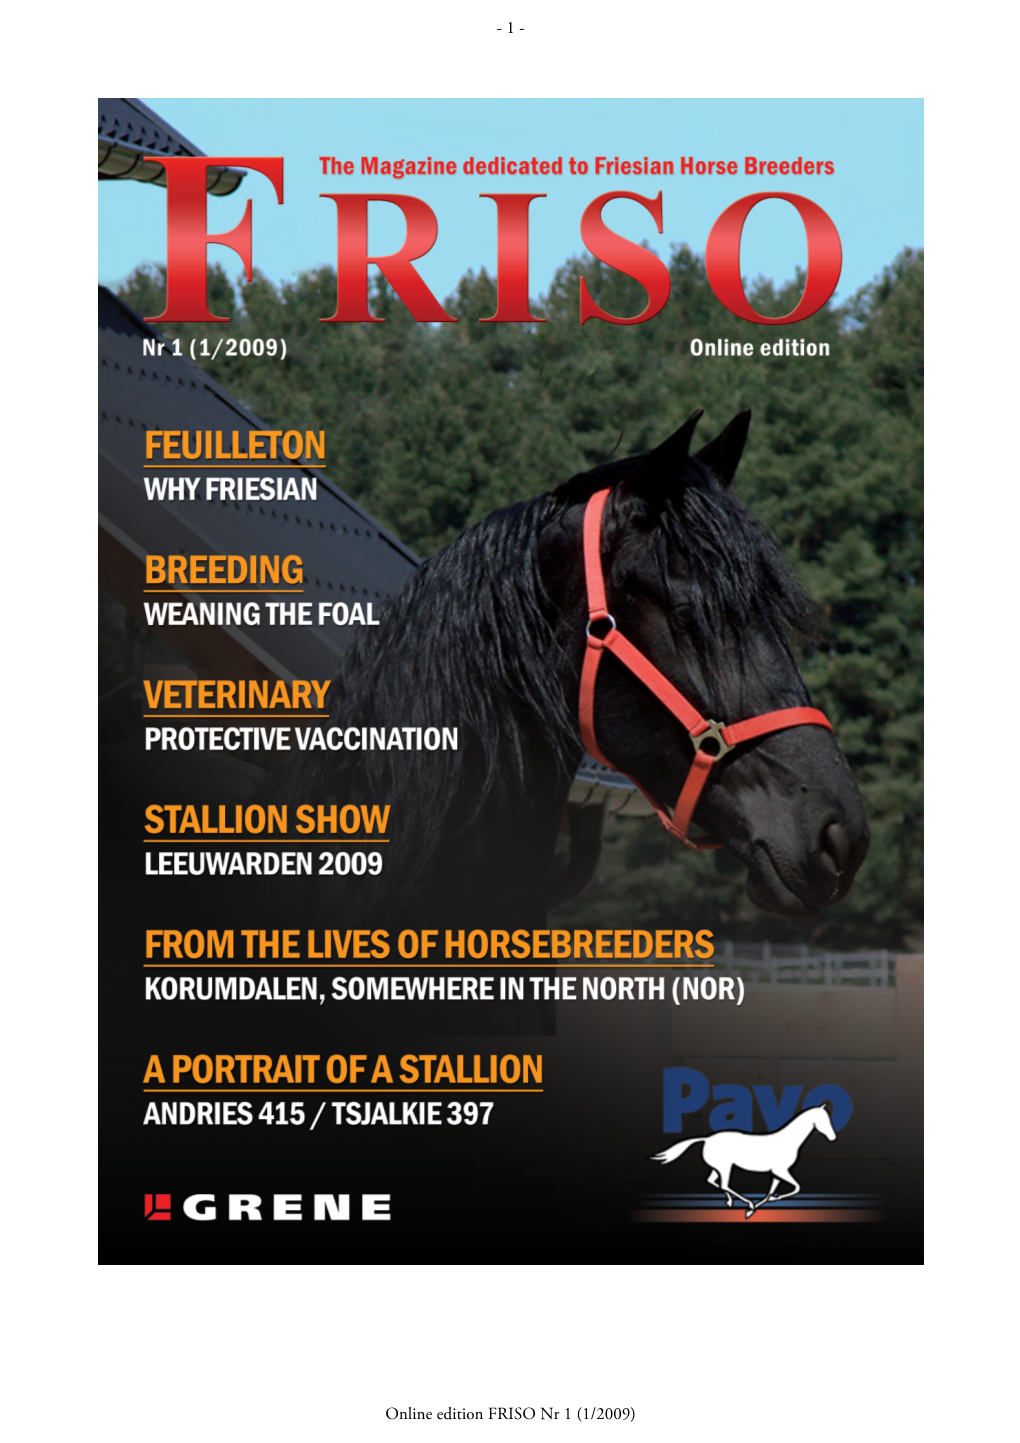 The Magazine Dedicated to Friesian Horse Breeders